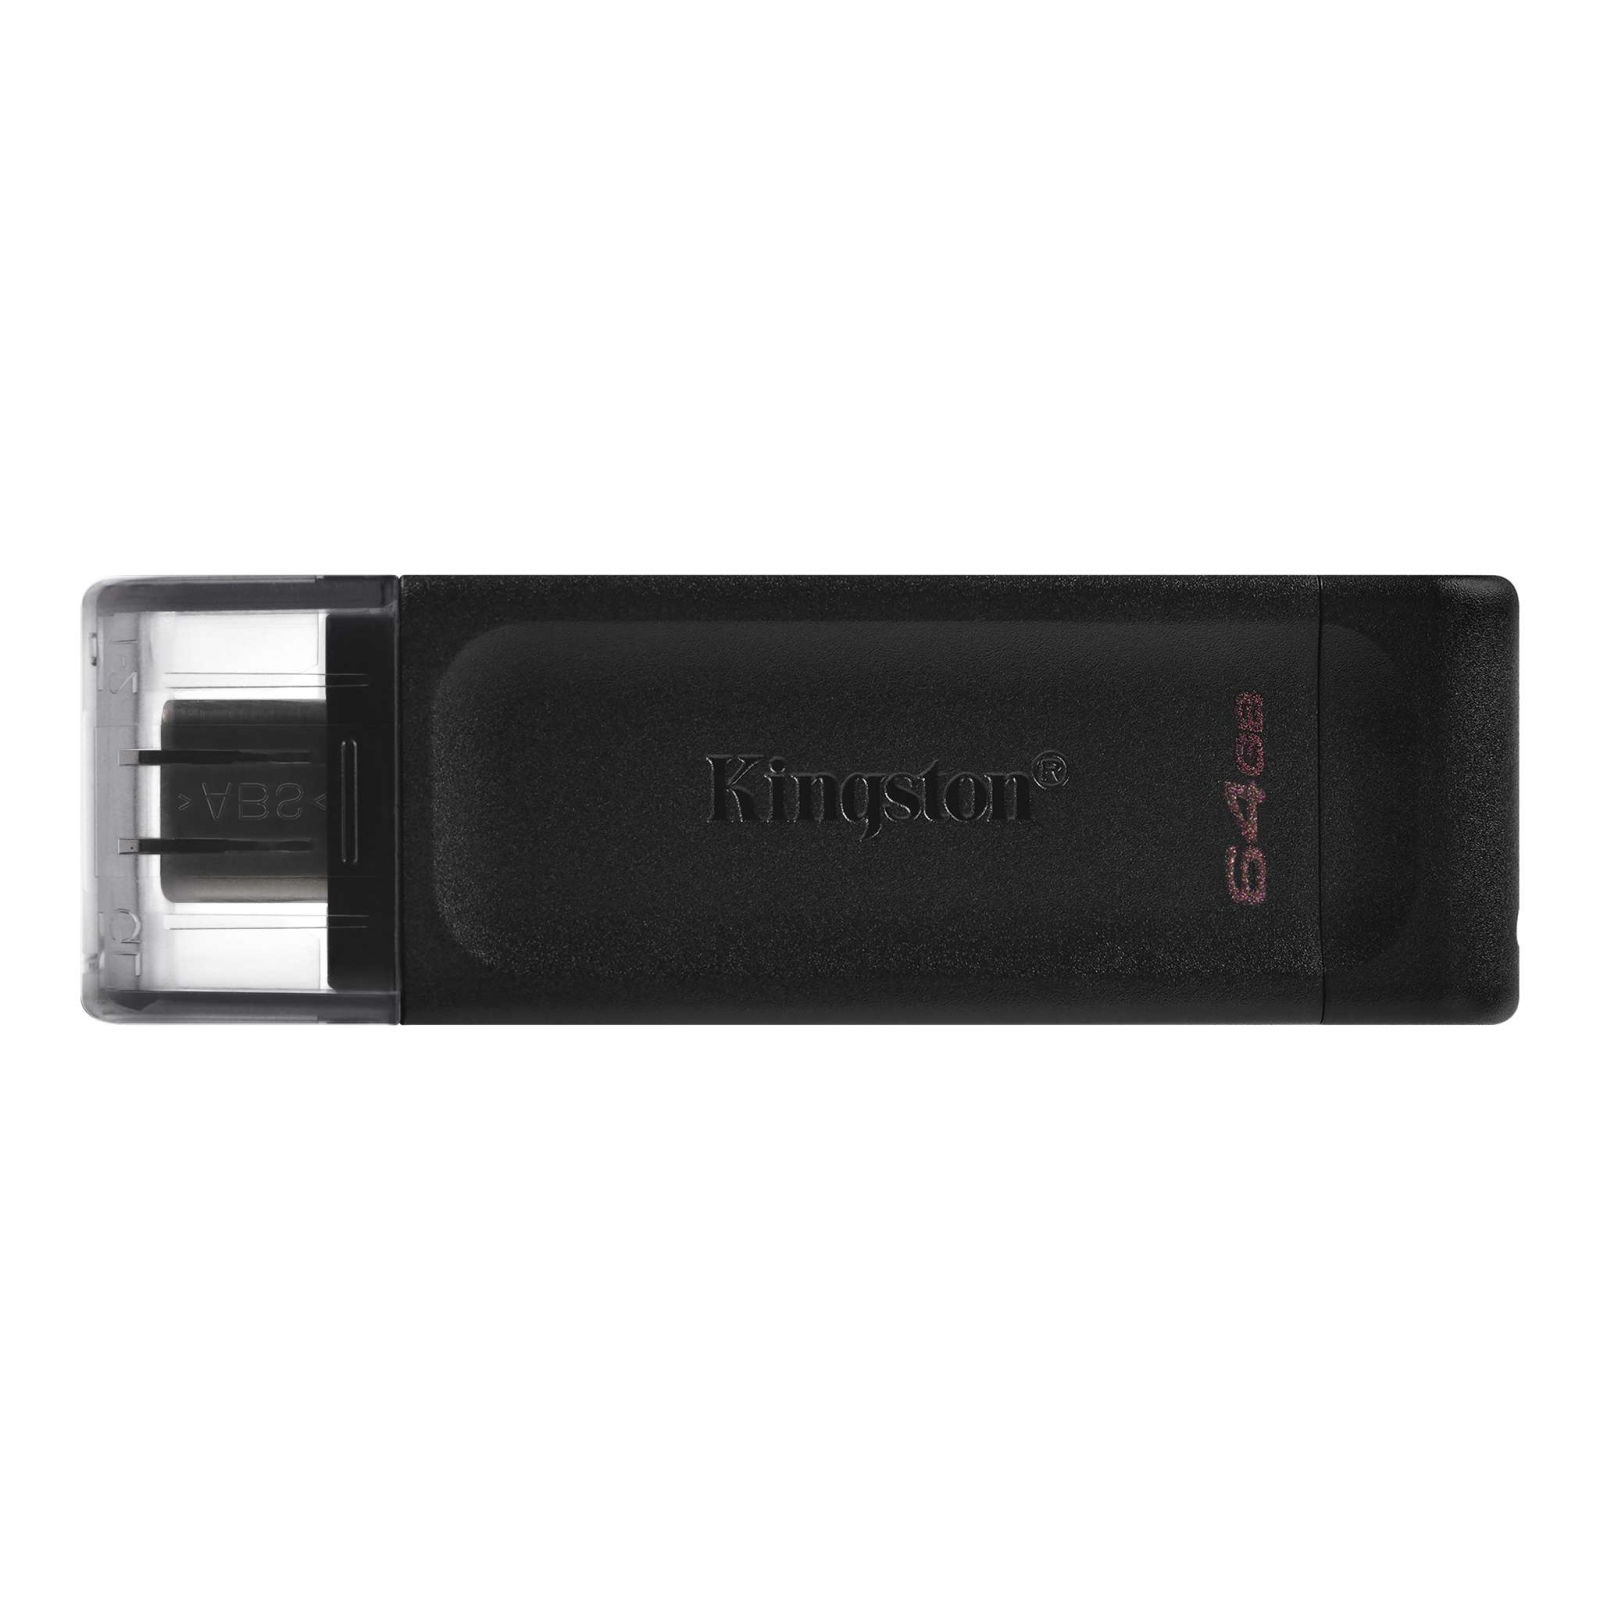 USB флеш накопитель Kingston 32GB DataTraveler 70 USB 3.2 / Type-C (DT70/32GB)